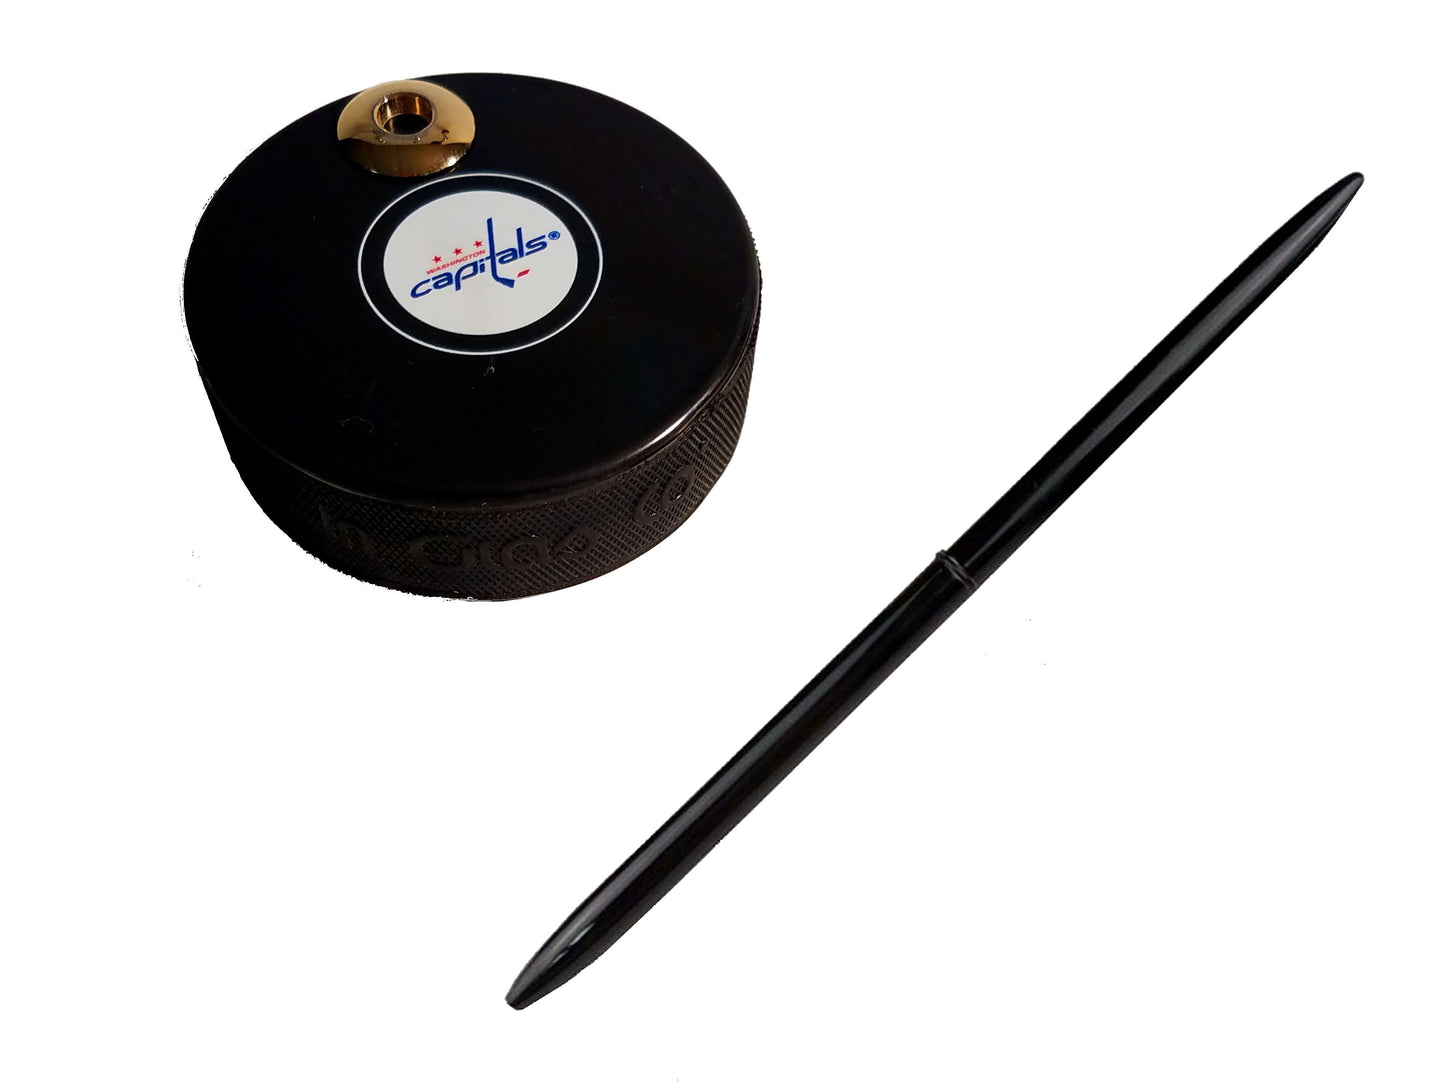 Washington Capitals Auto Series Artisan Hockey Puck Desk Pen Holder With Our #96 Sleek Pen